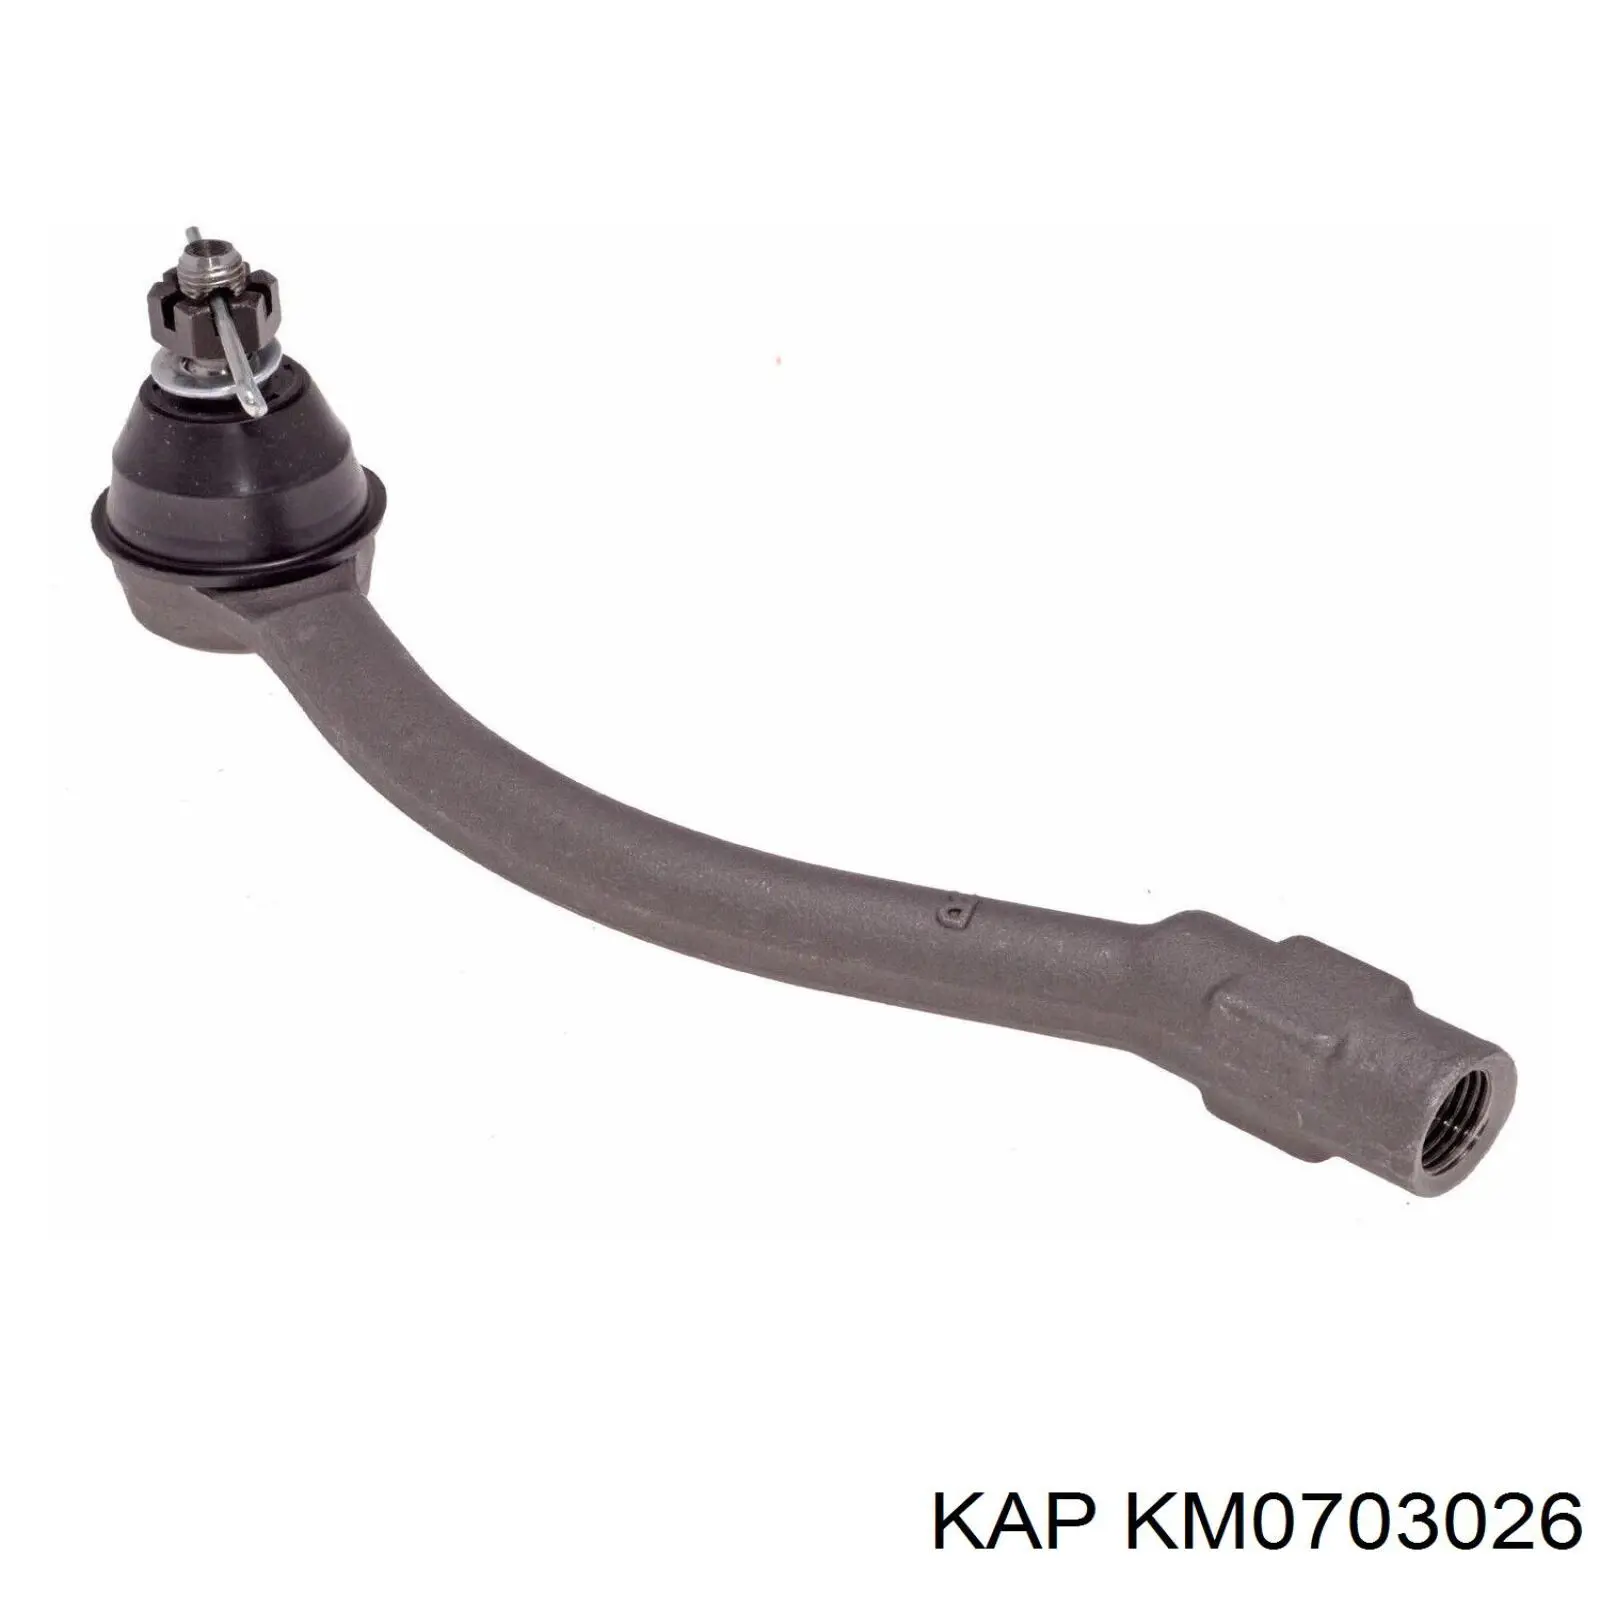 KM0703026 KAP rótula barra de acoplamiento exterior